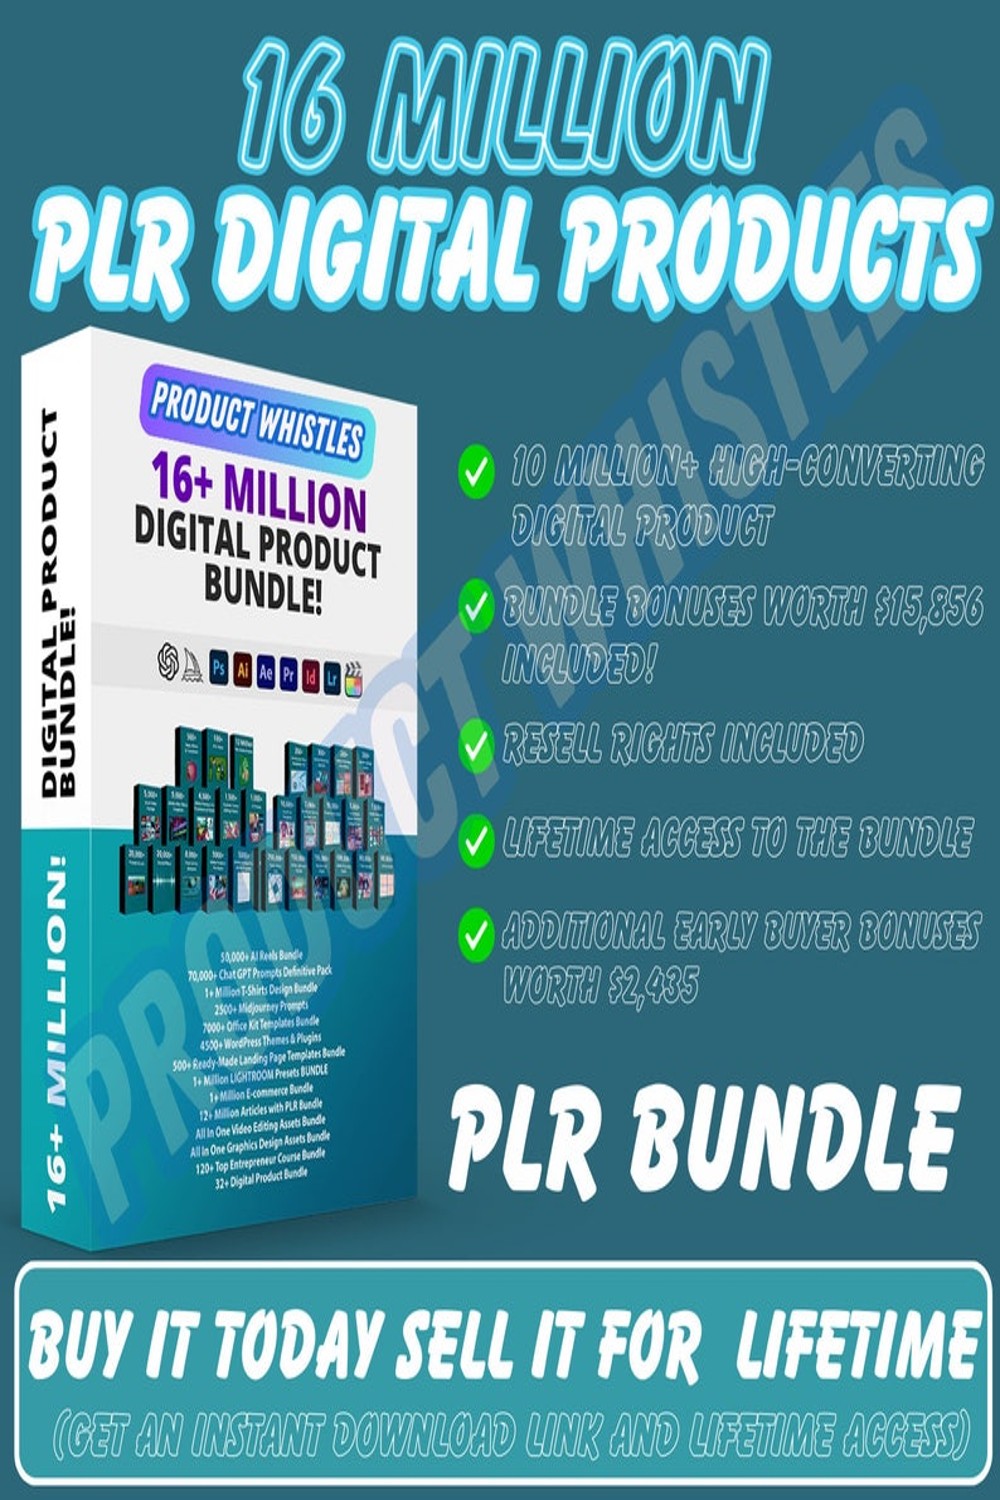 16+ million digital product bundles! 16+ Million Files | eBooks | Adobe Files |Video Editing Bundle | Graphic Design | Developer Tools pinterest preview image.